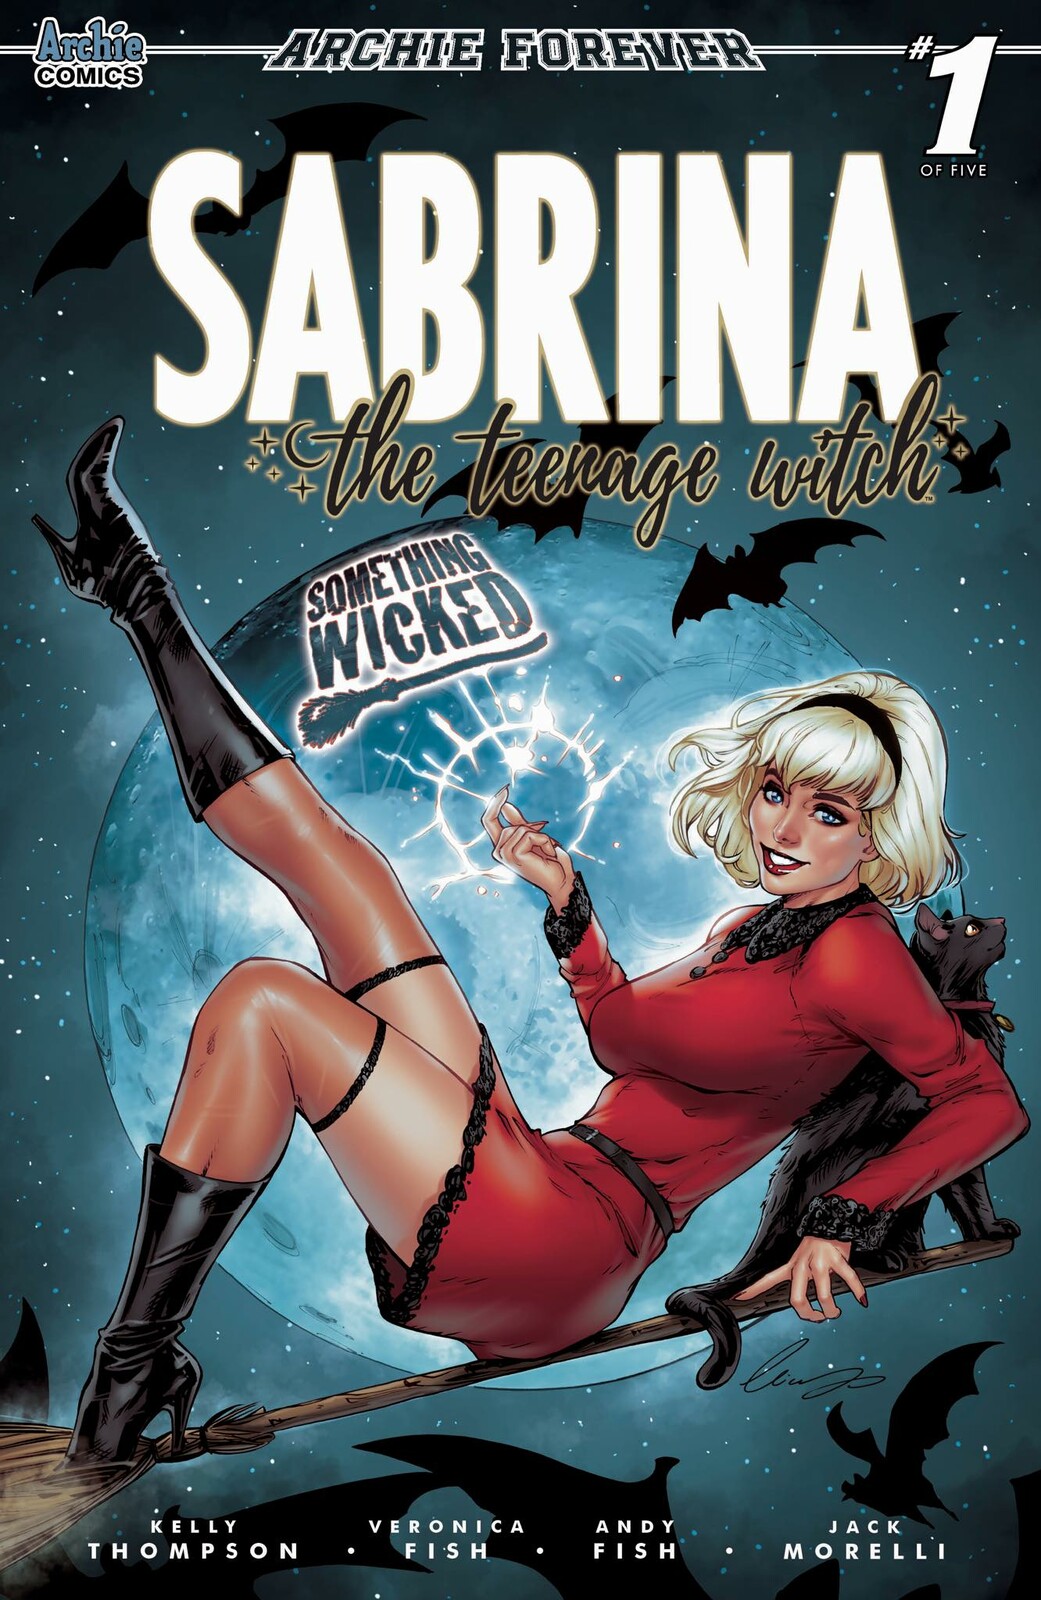 Sabrina Something Wicked #1